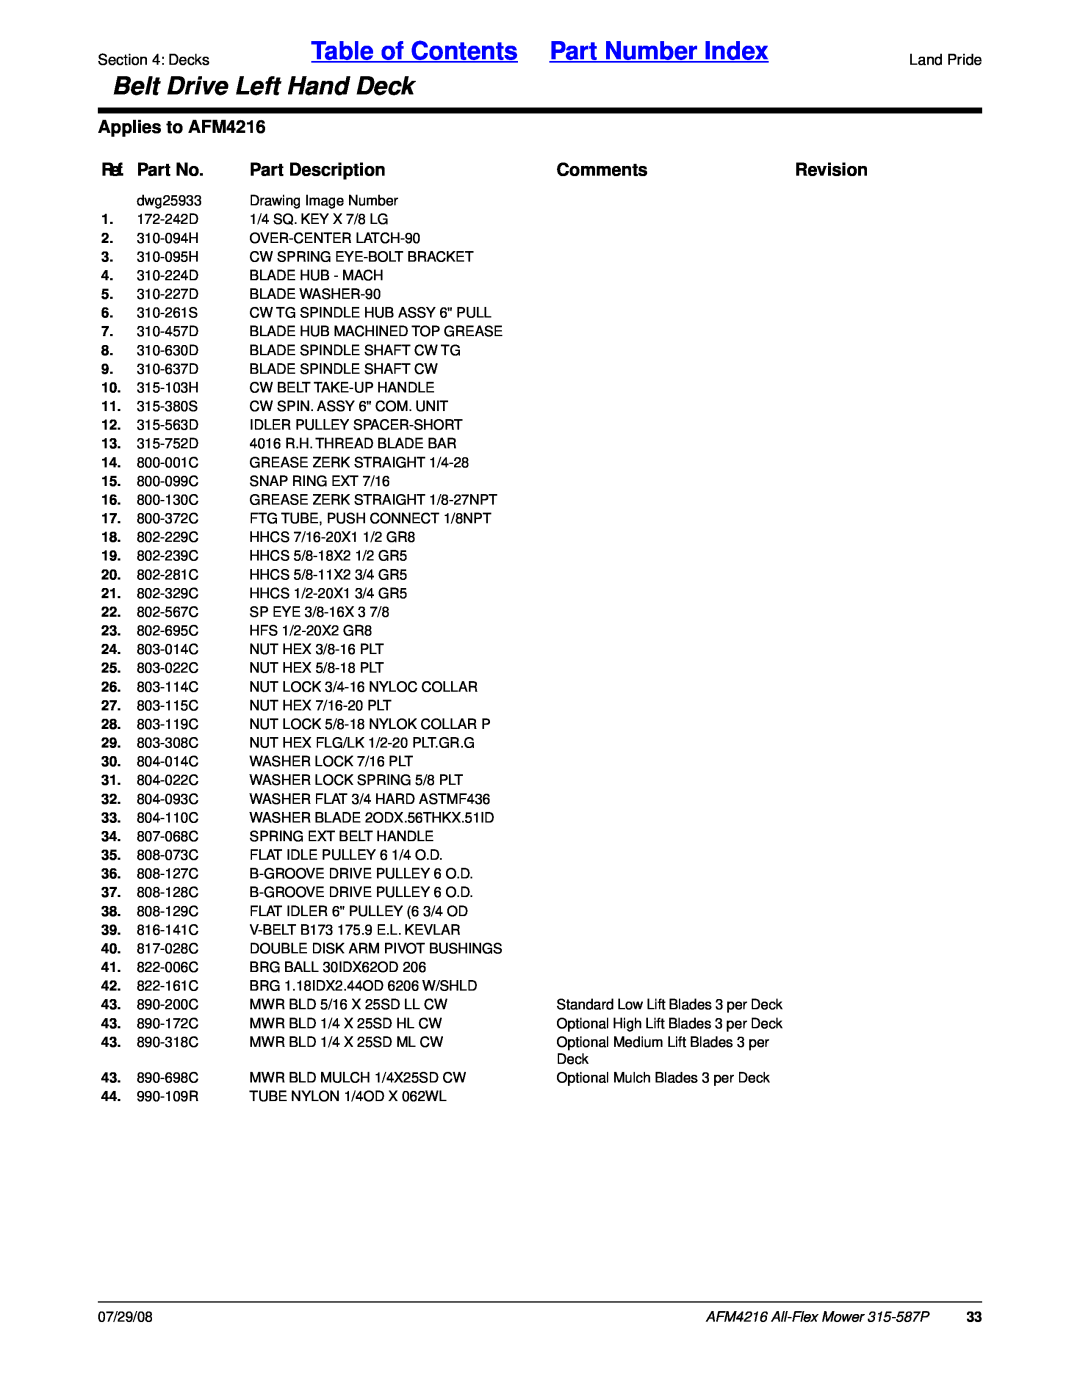 Land Pride Table of Contents Part Number Index, Belt Drive Left Hand Deck, Applies to AFM4216, Ref. Part No, Comments 